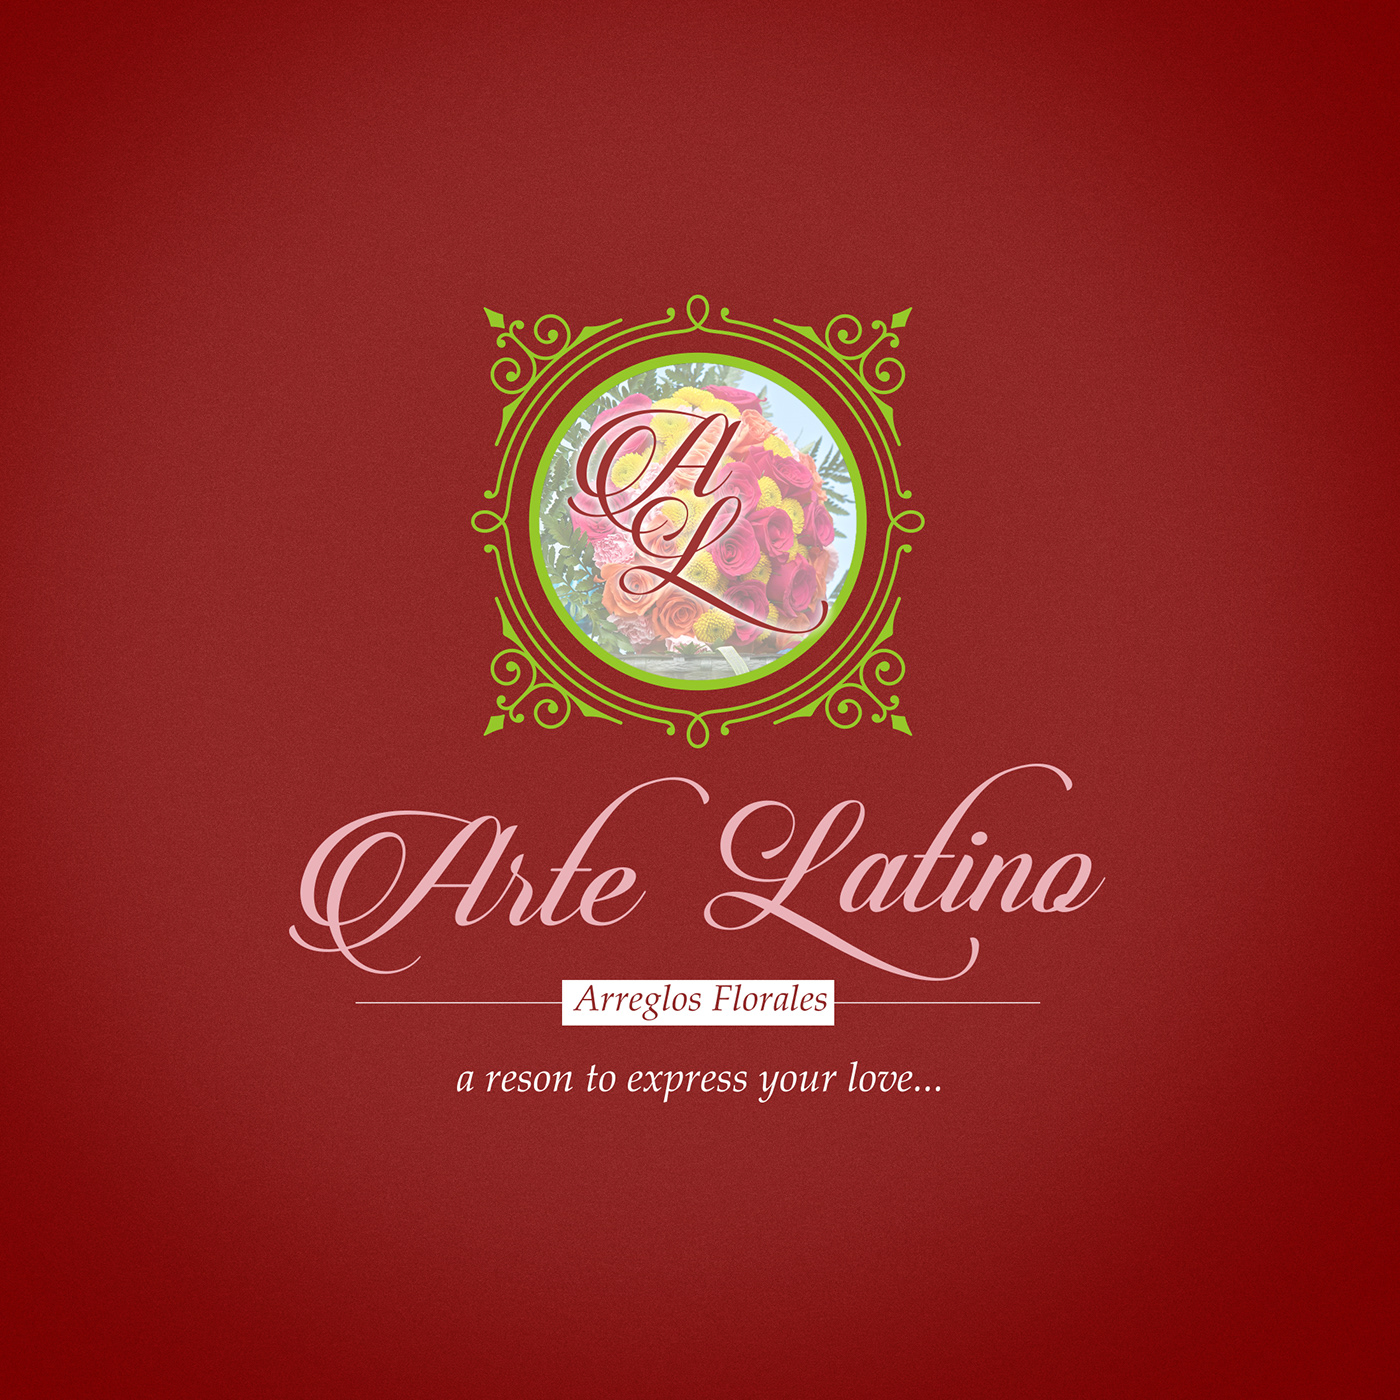 arte diseño design latino logo colors brand creative conceptual